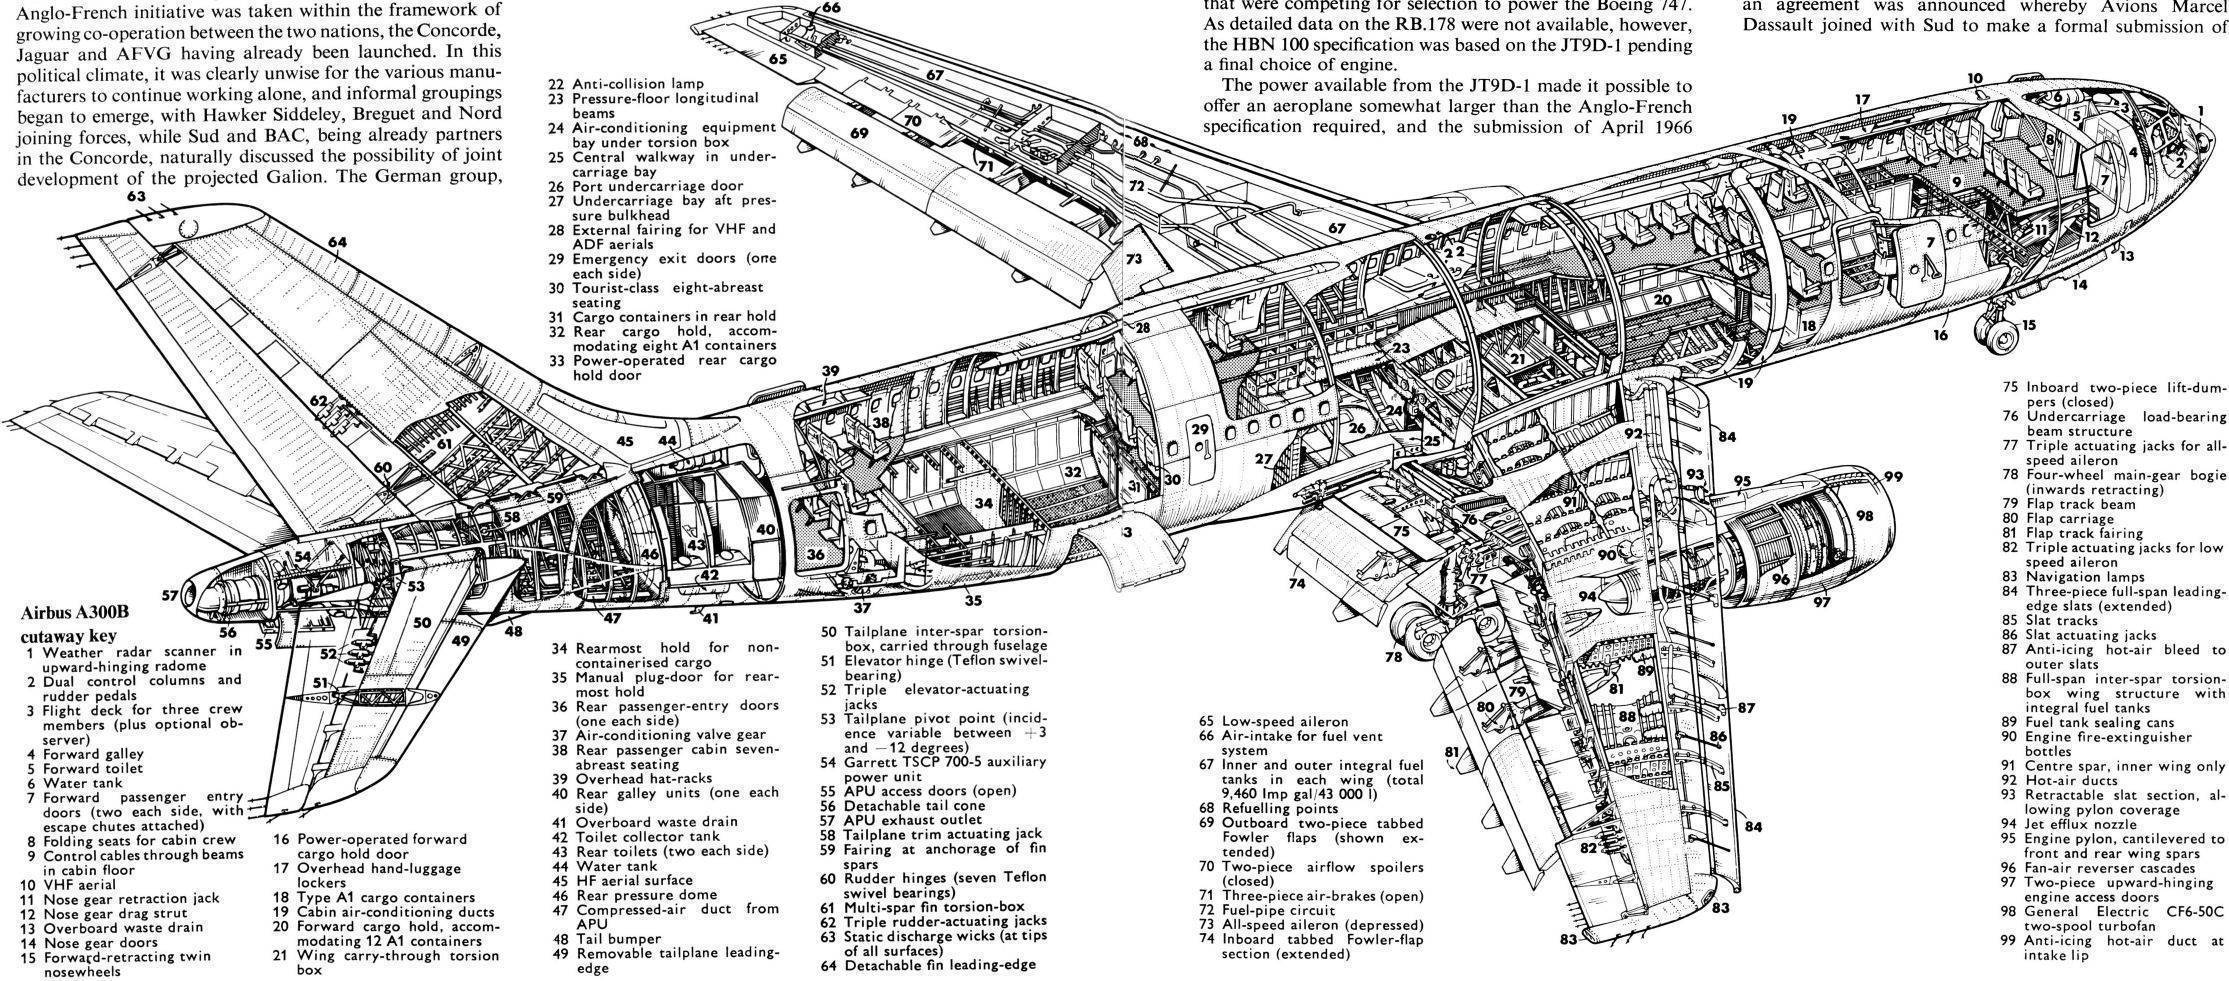 Airbus a330-300: характеристика, фото, схема посадочных мест | adestra.ru